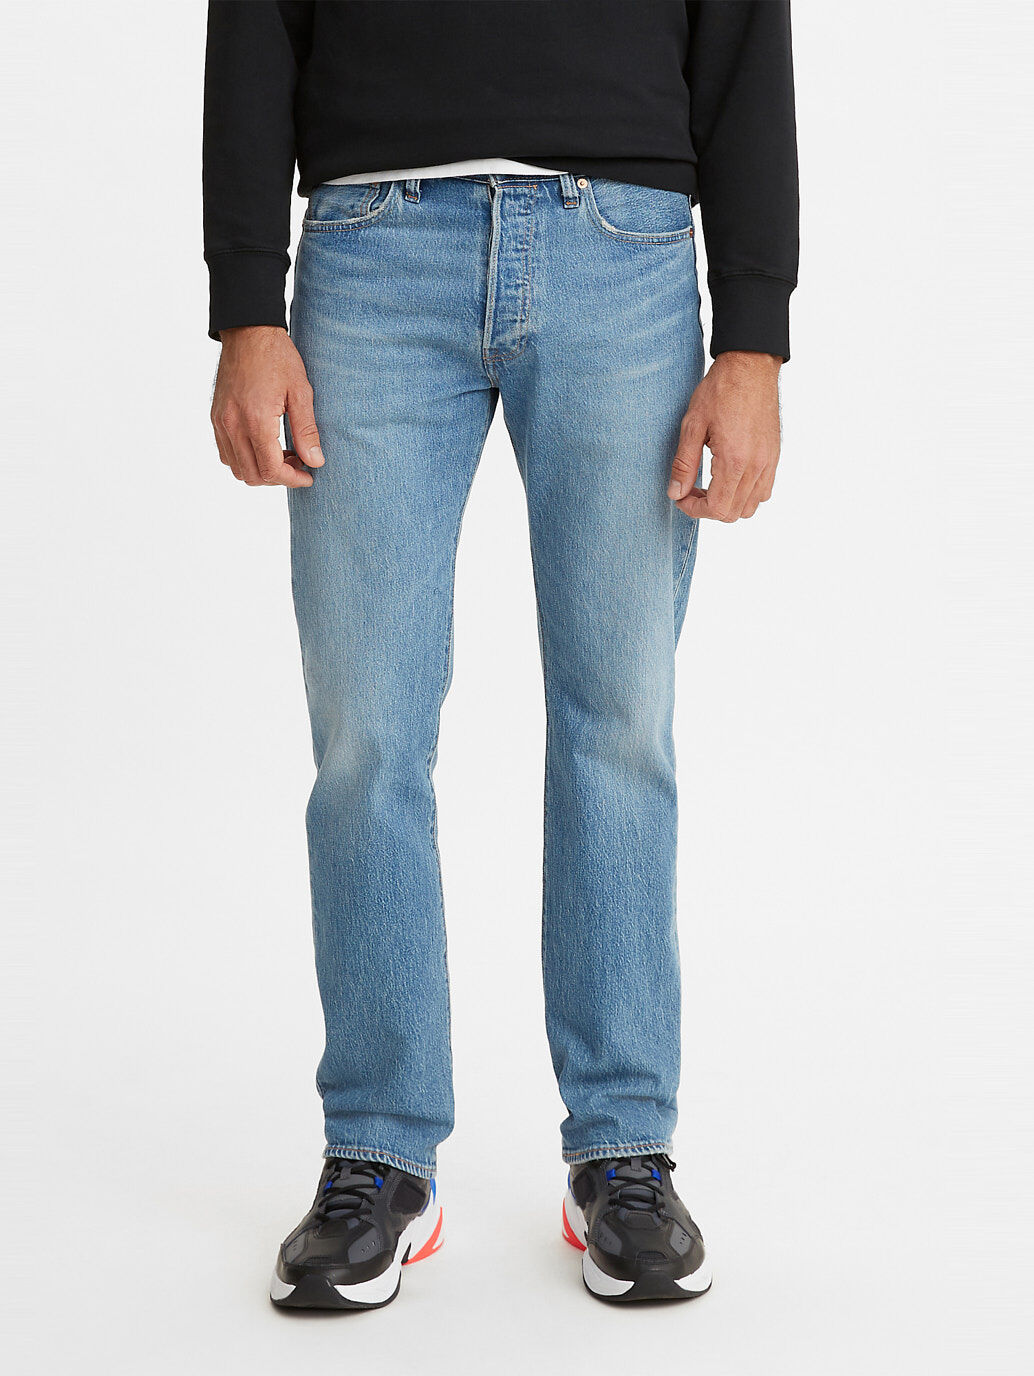 levi 501 jeans australia